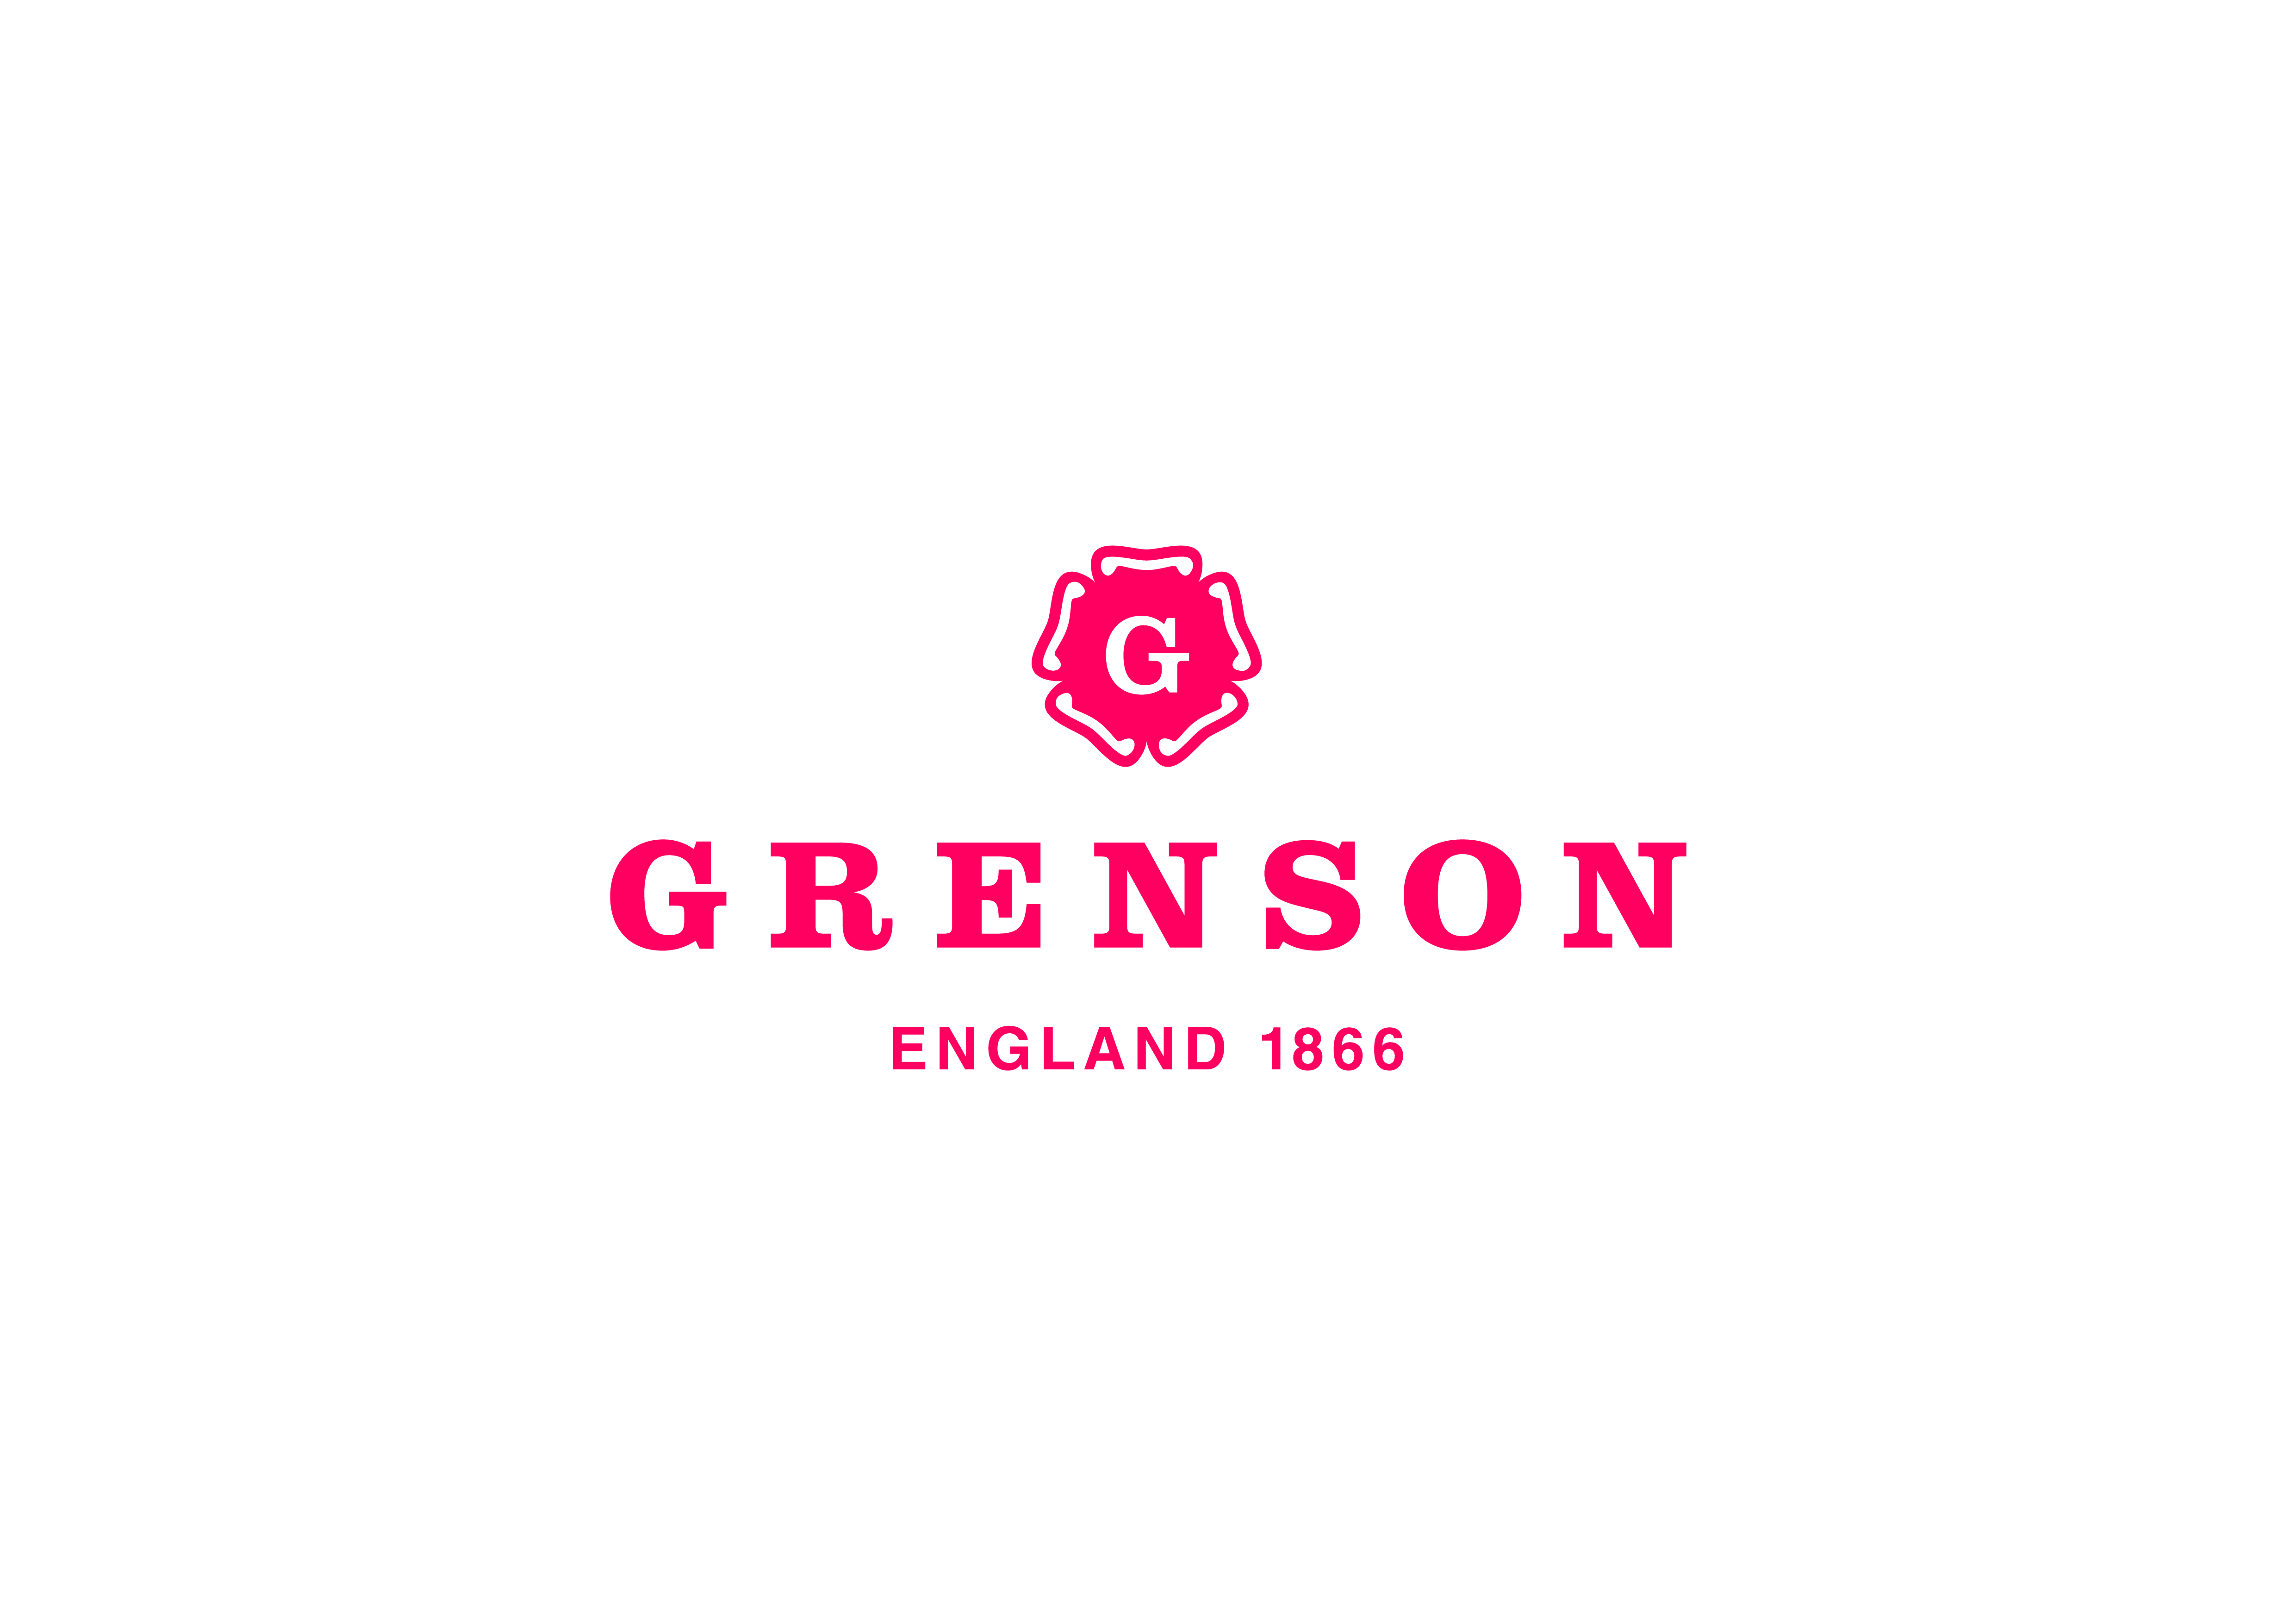 Grenson Logo